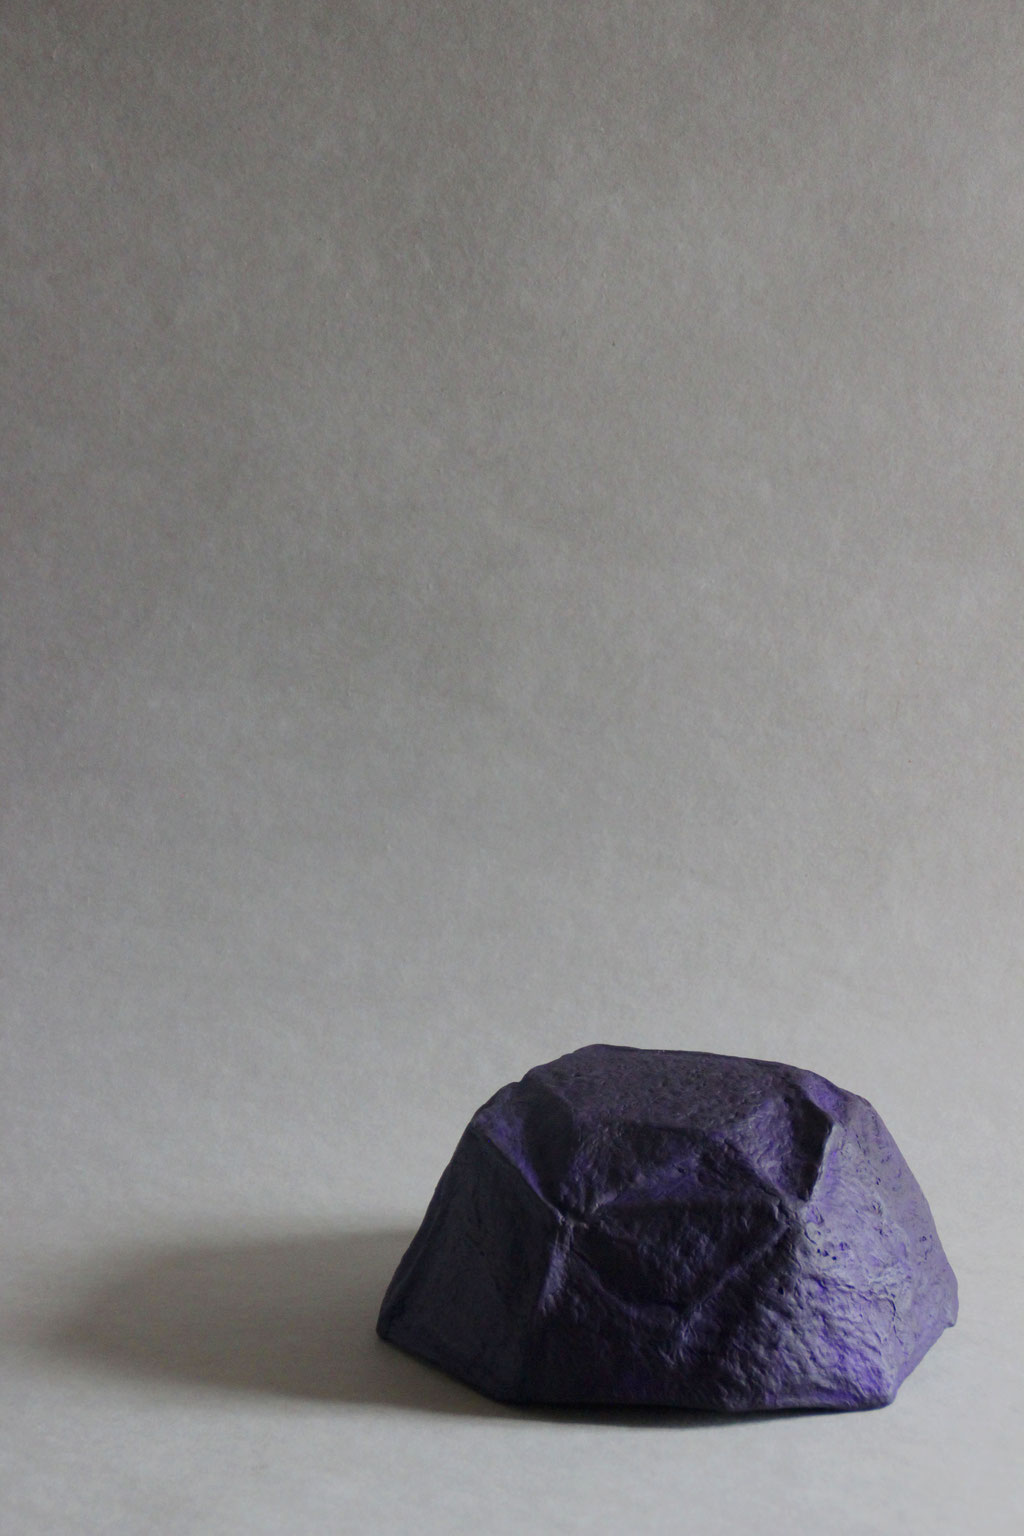 Caldera medium dark purple